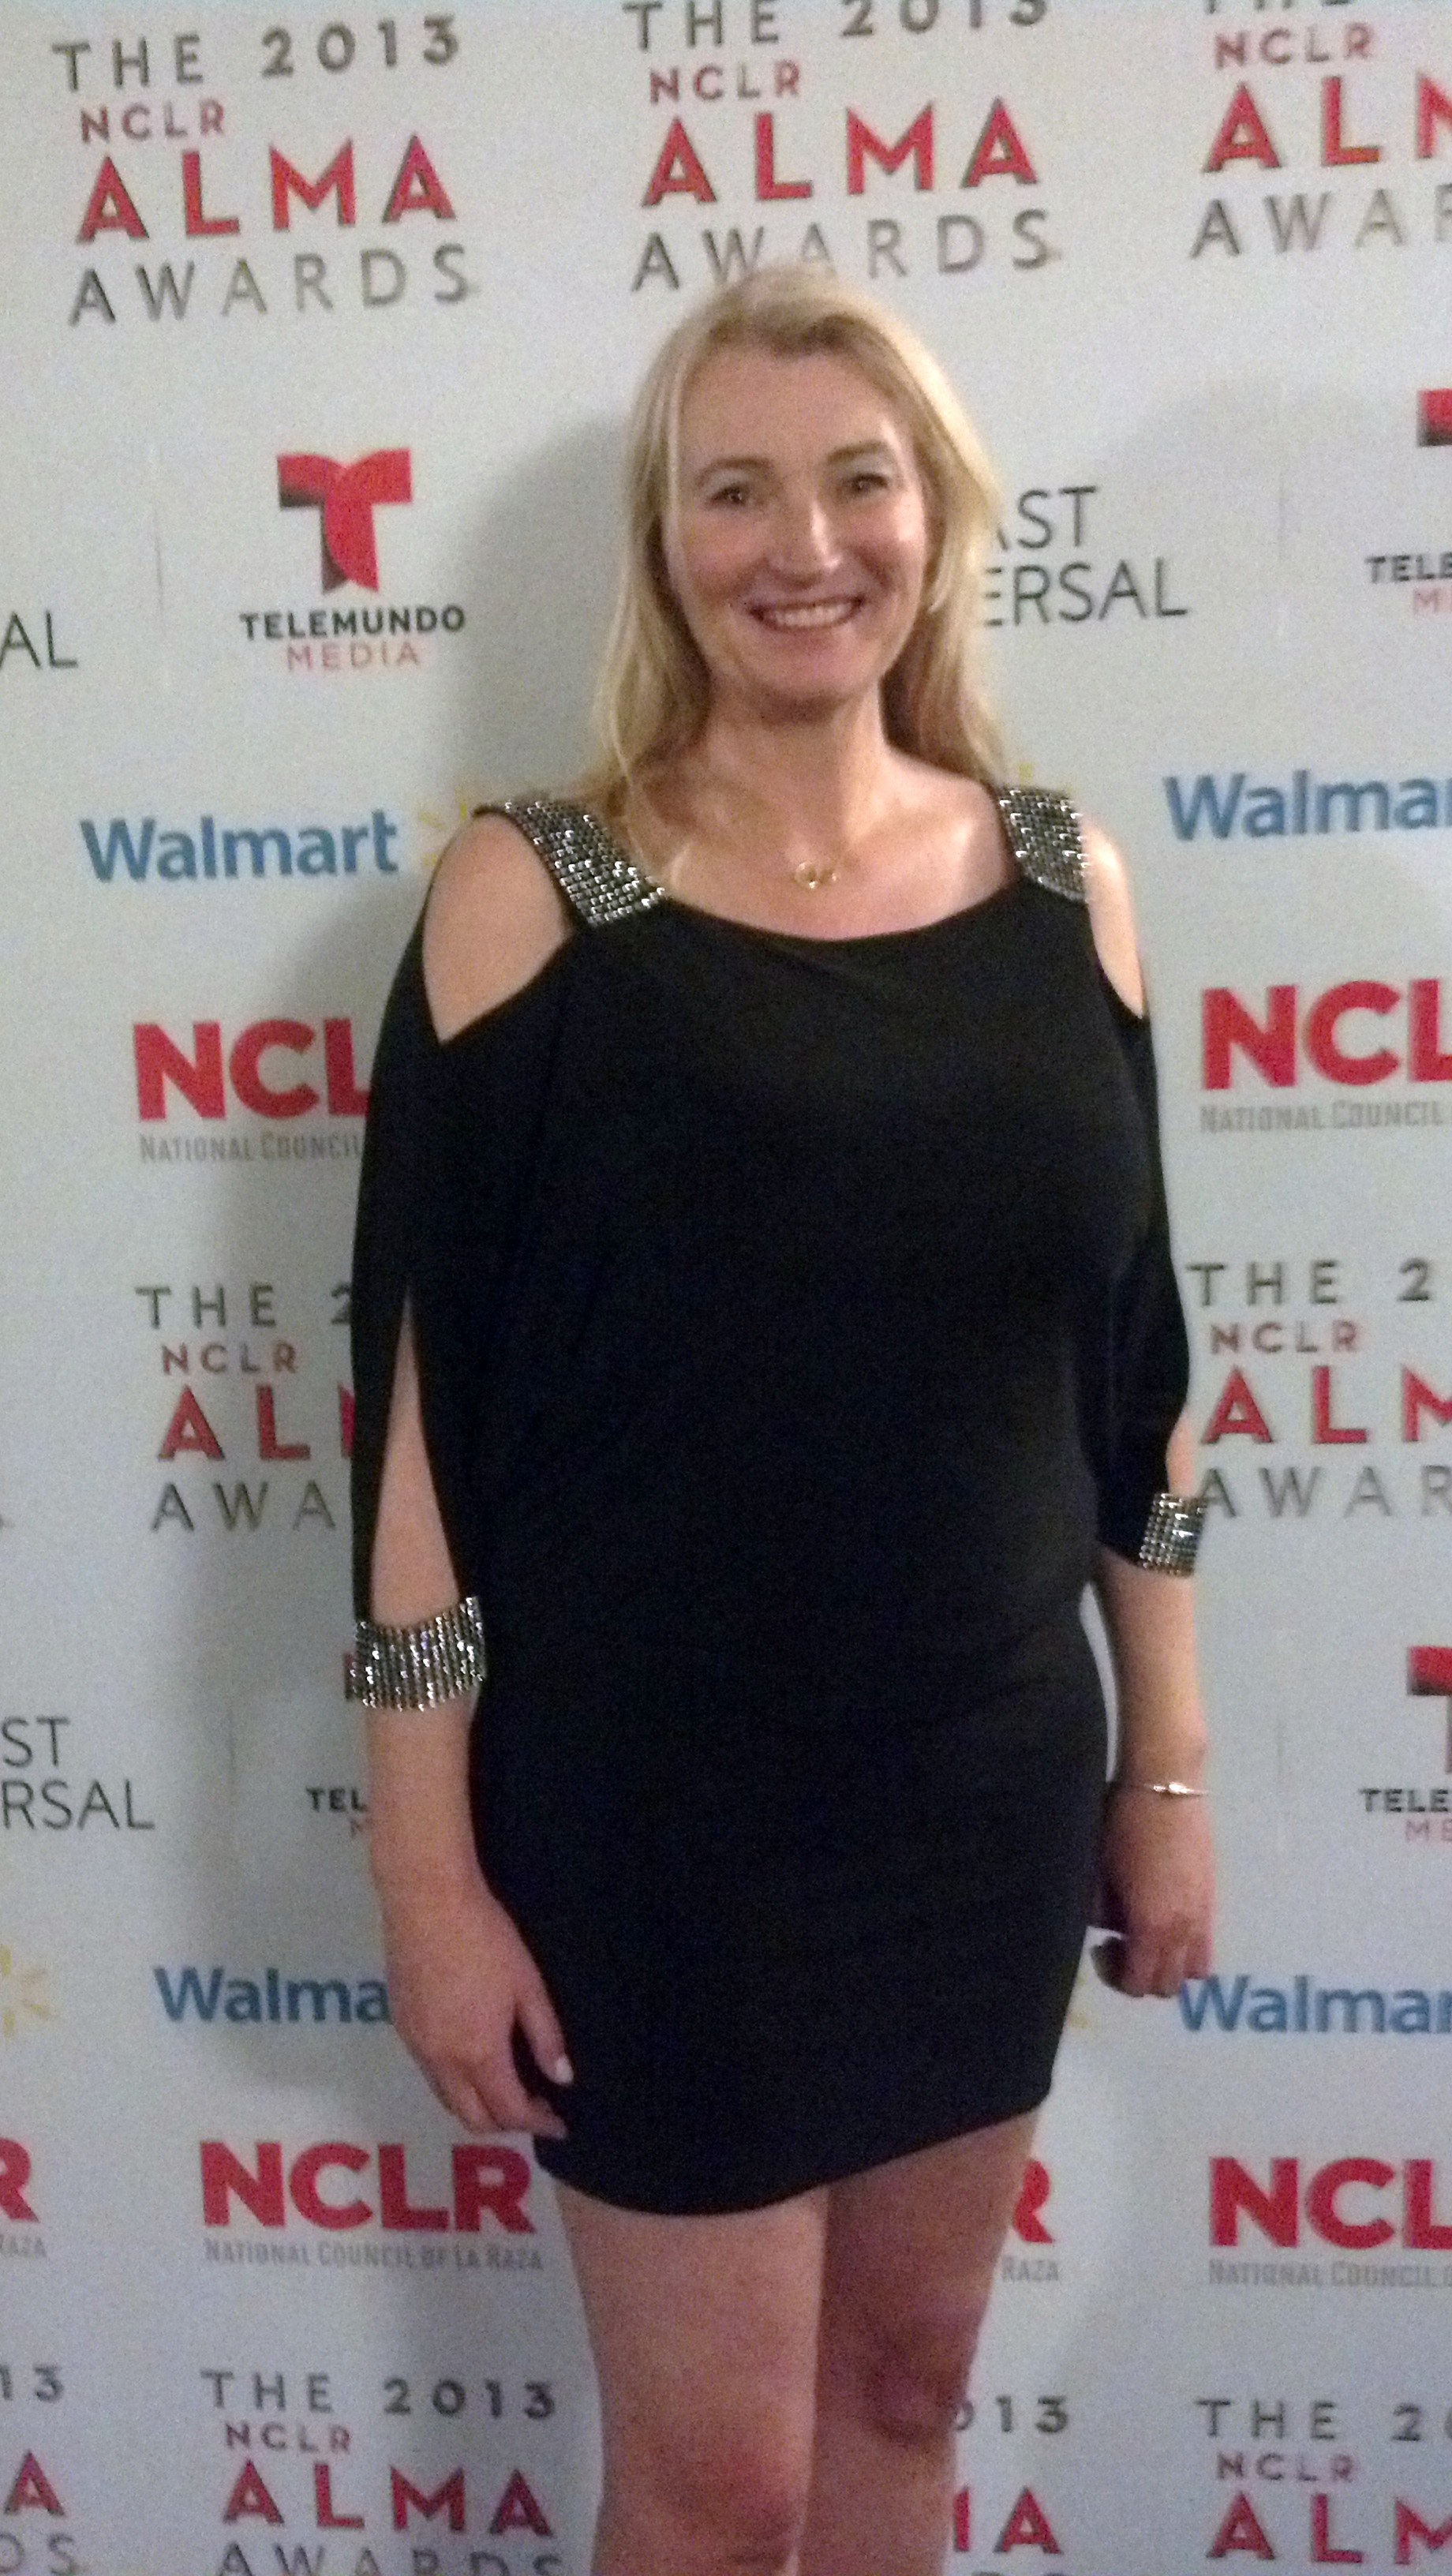 Anna Wilding at ALMA Awards September 2013 wearing Kalonskincare.com